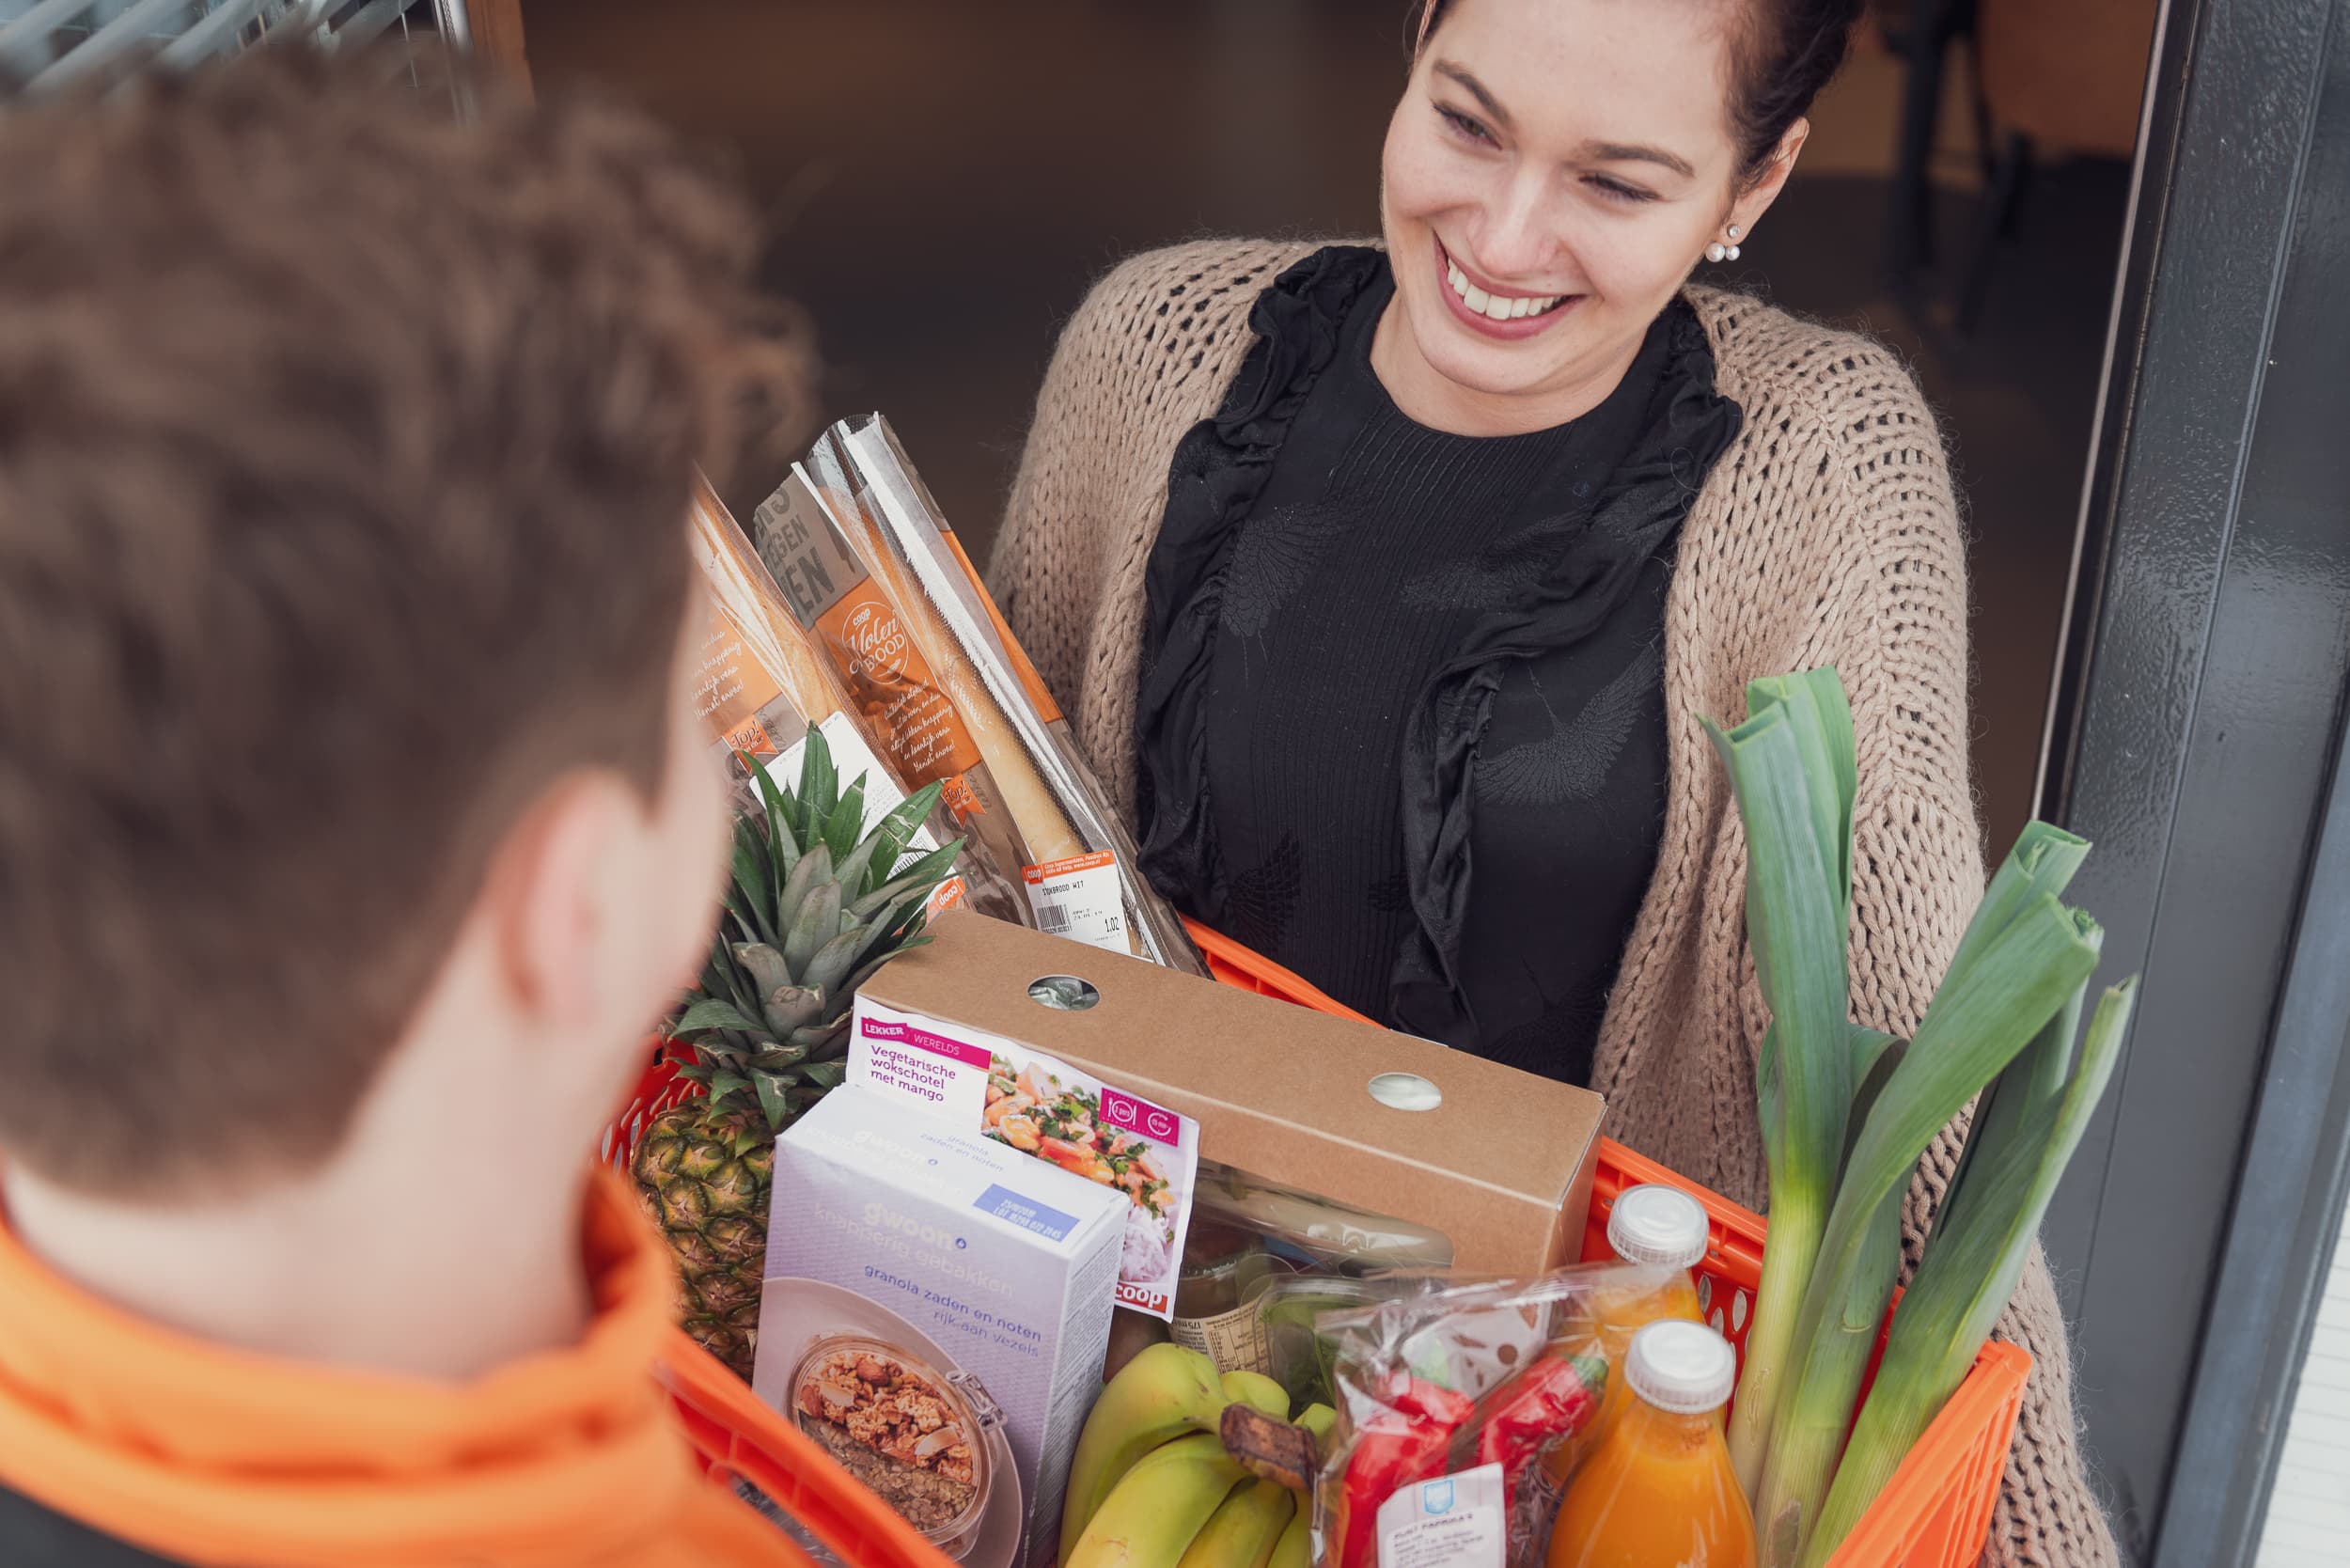 coop-omnichannel-strategy-Sarah-opening-door-to-receive-groceries-from-delivery